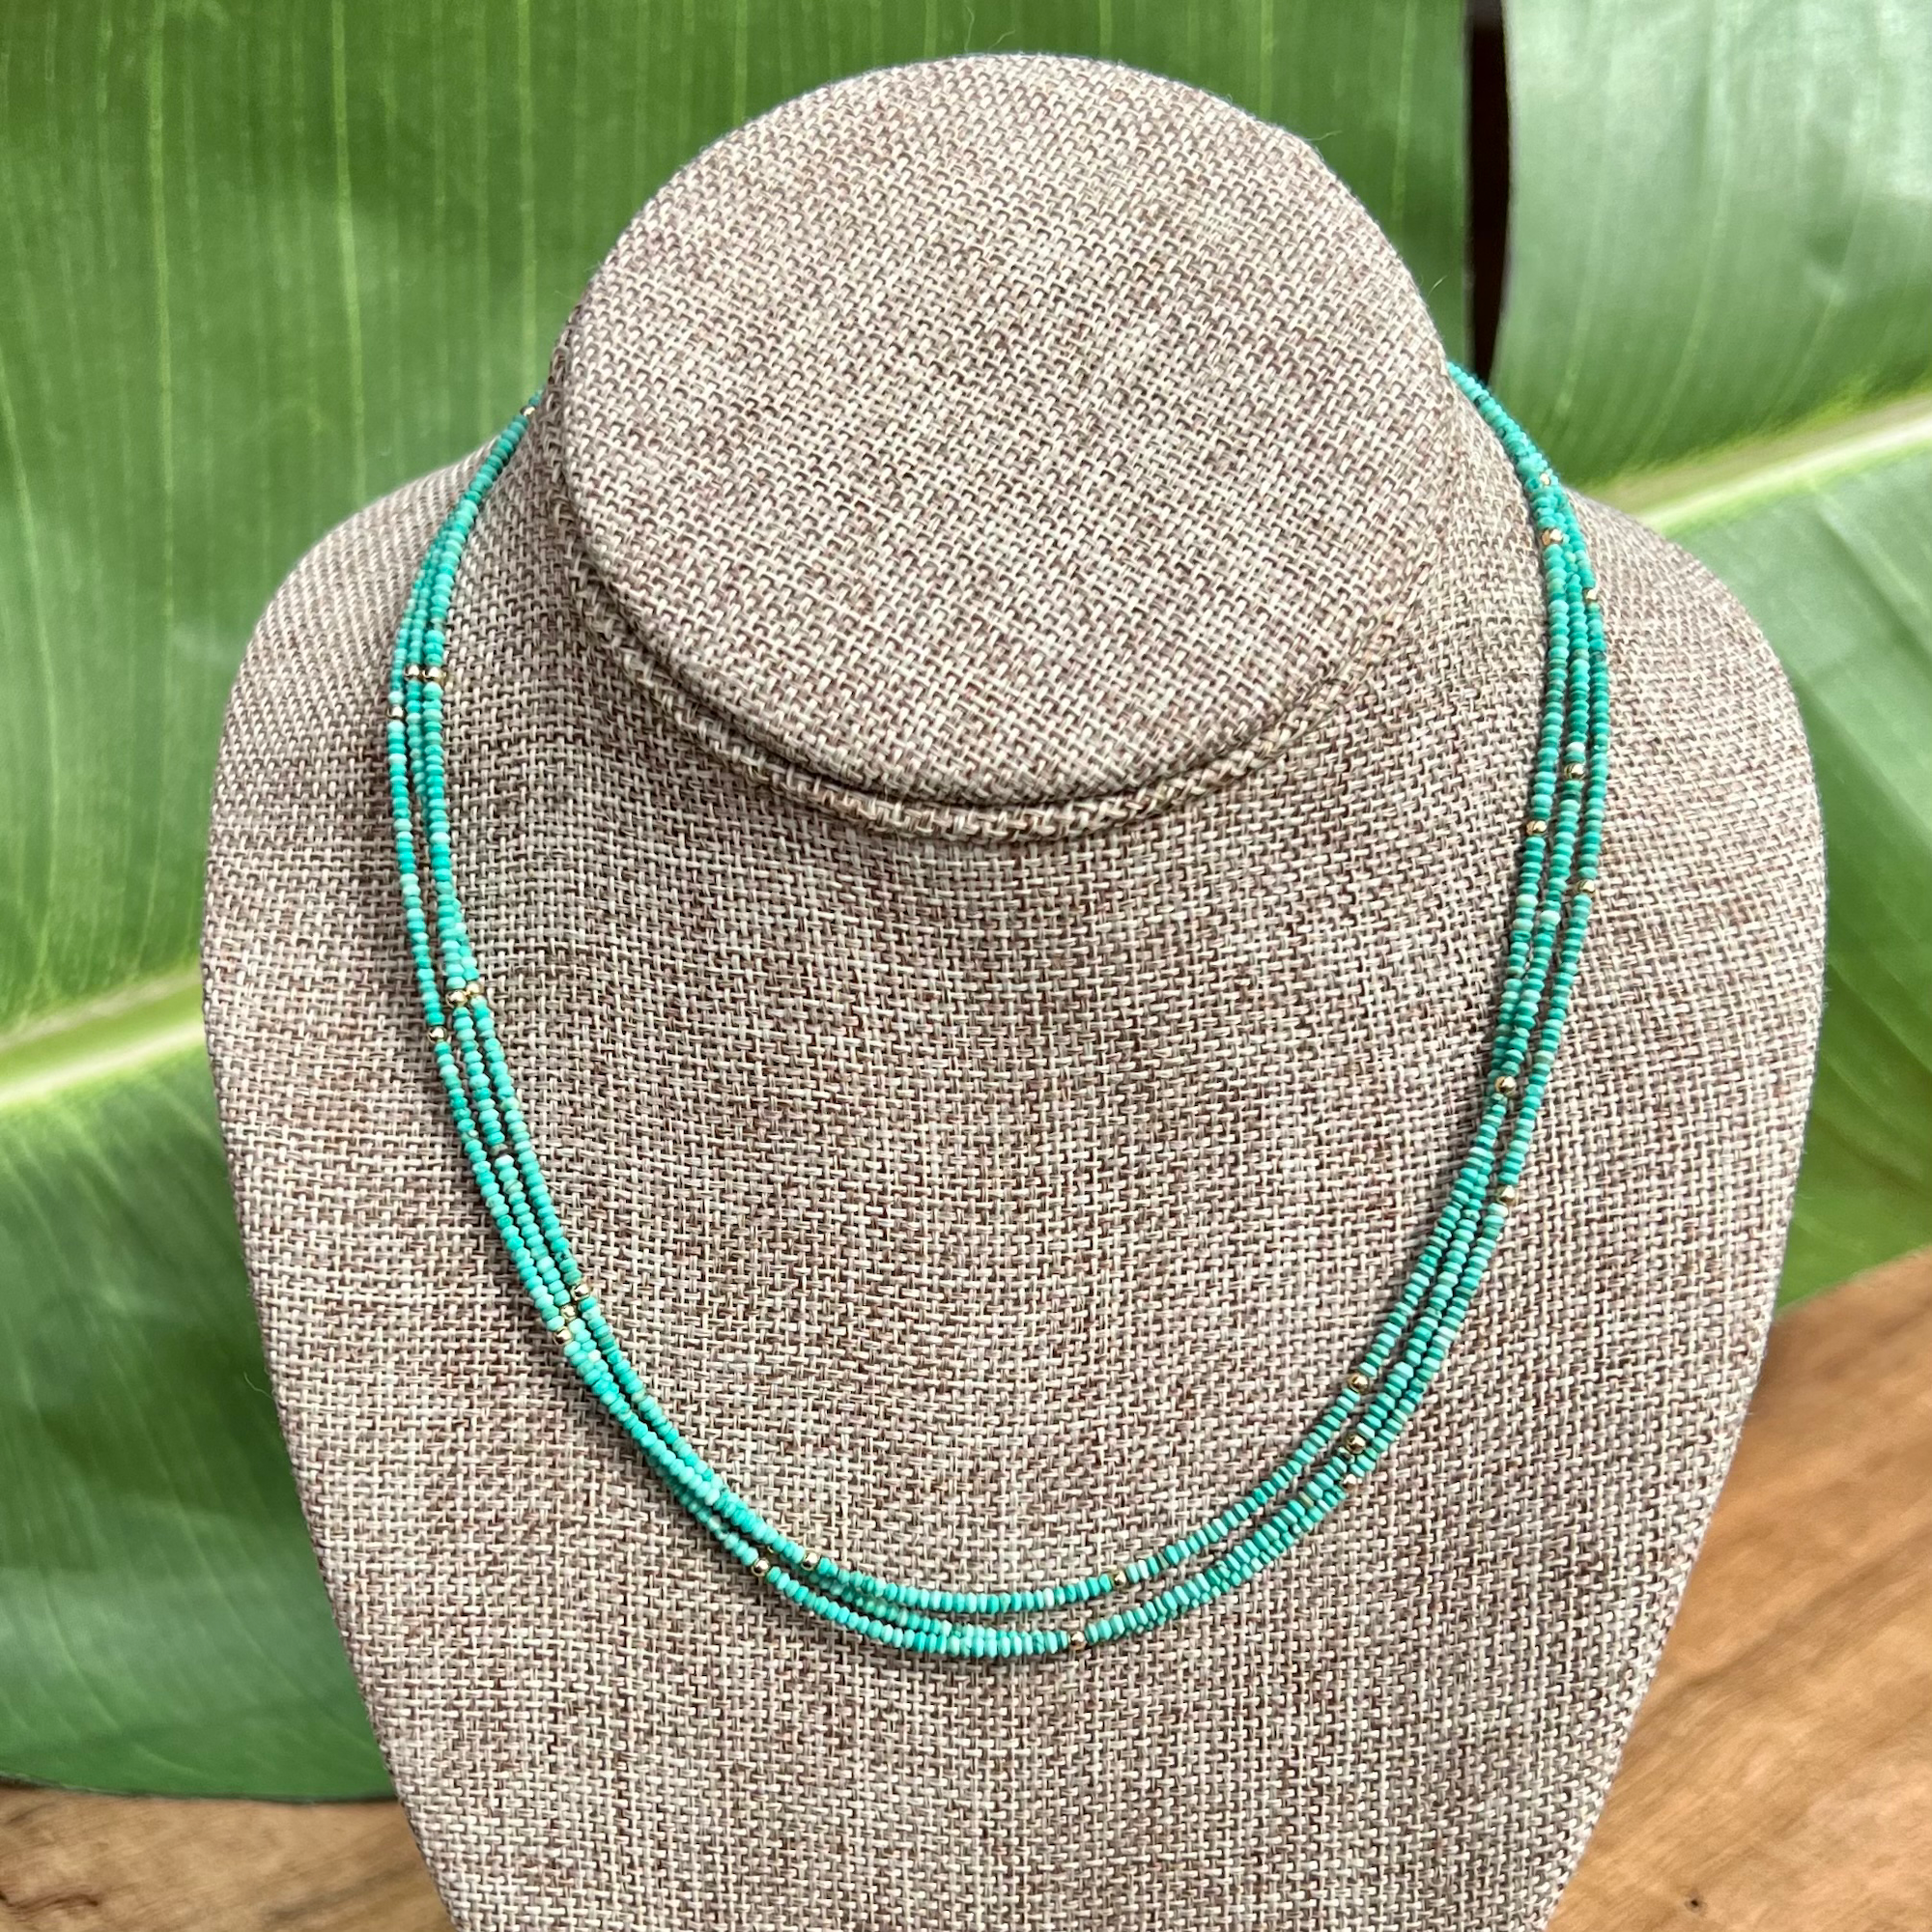 Turquoise Heishi Necklace